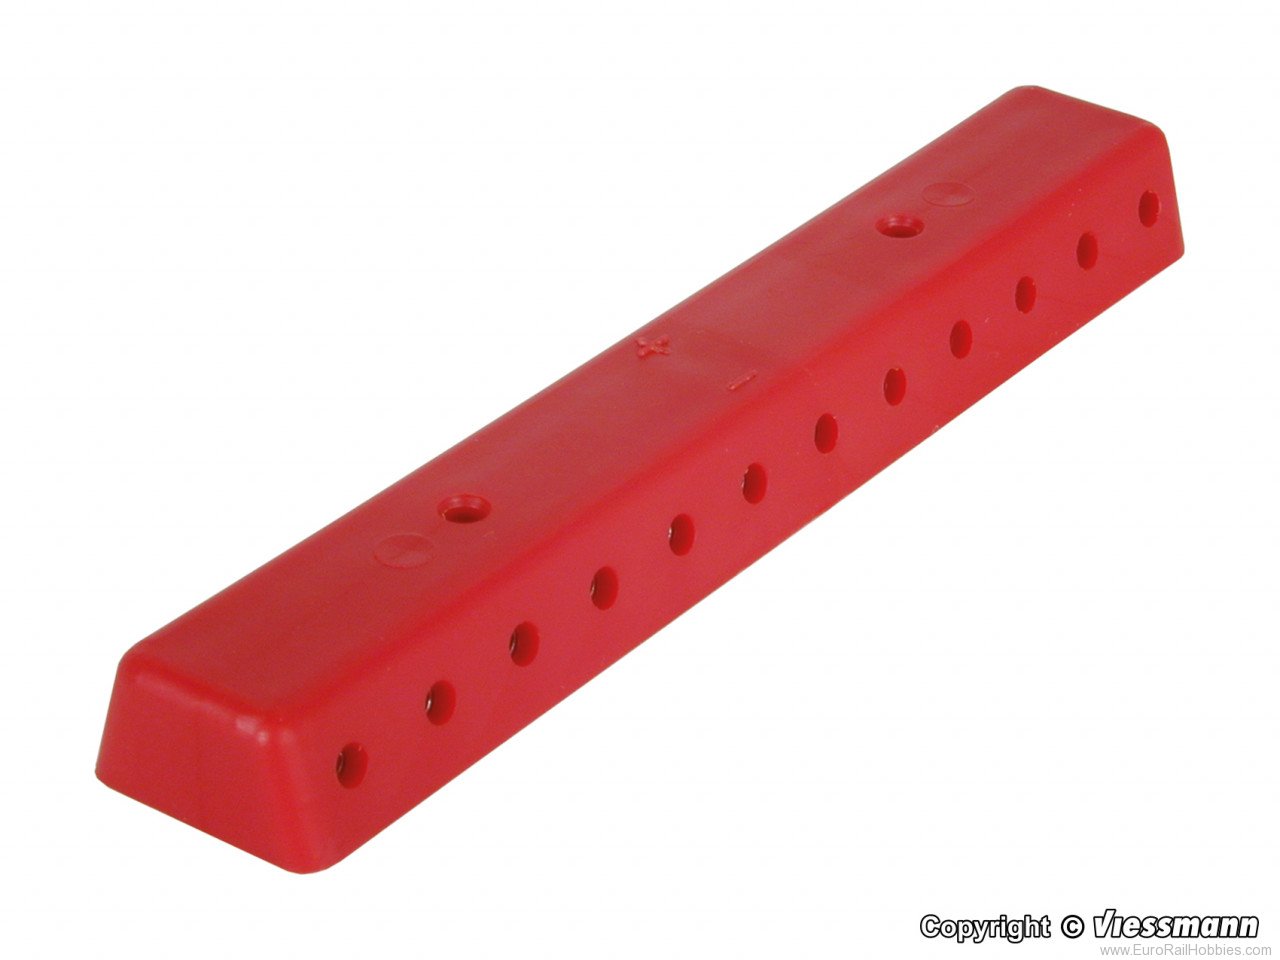 Viessmann 6844 Rail, red, with screws, 2 pieces